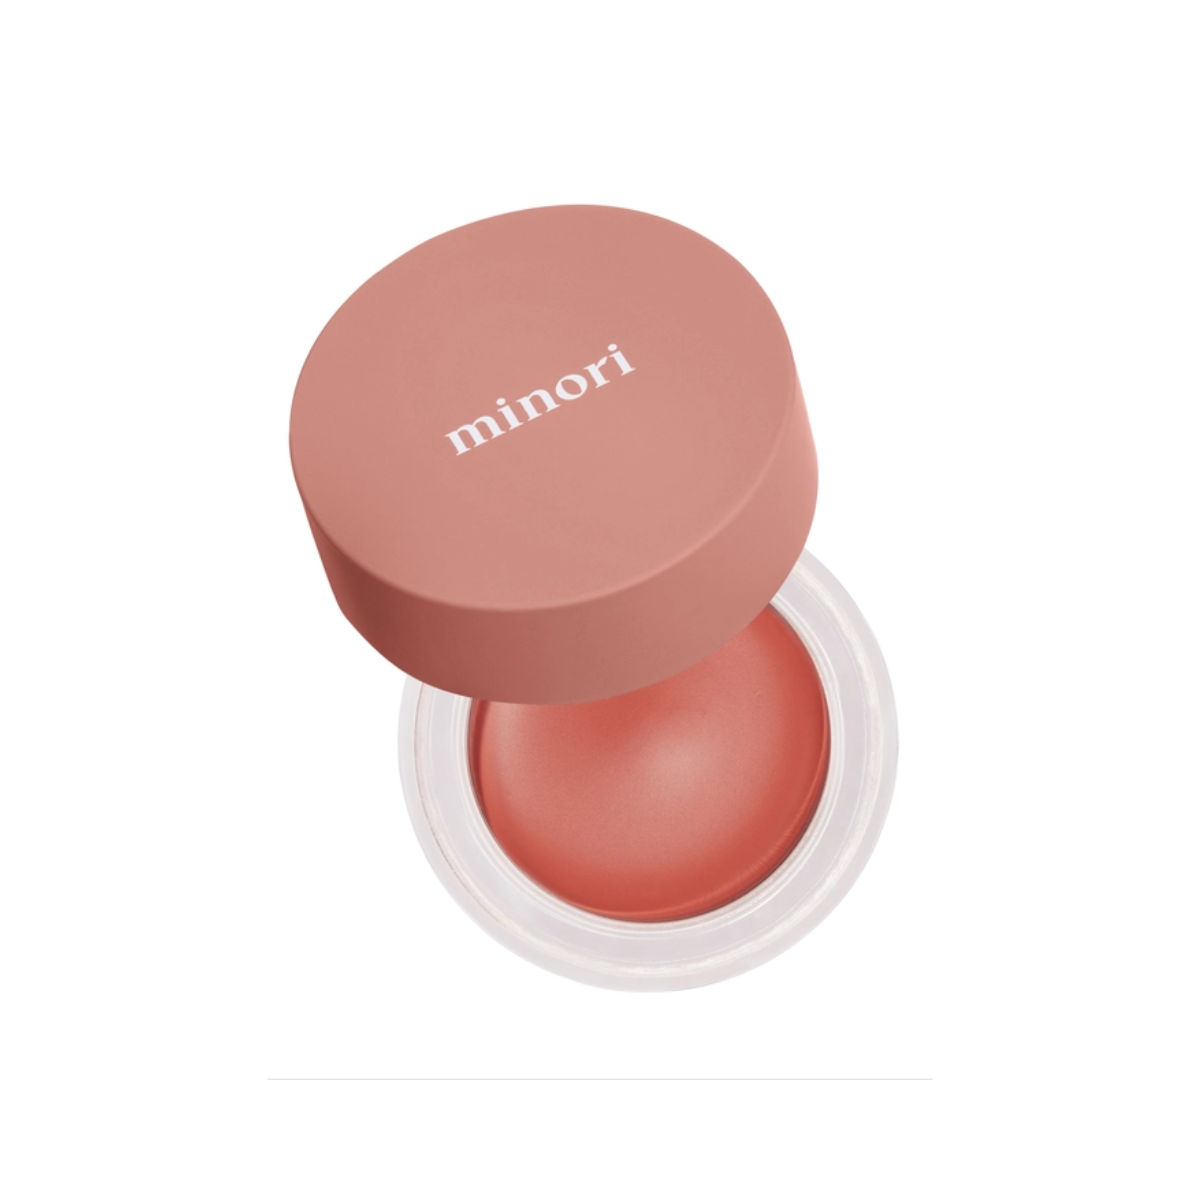 Minori Cream Blush - Scarlet